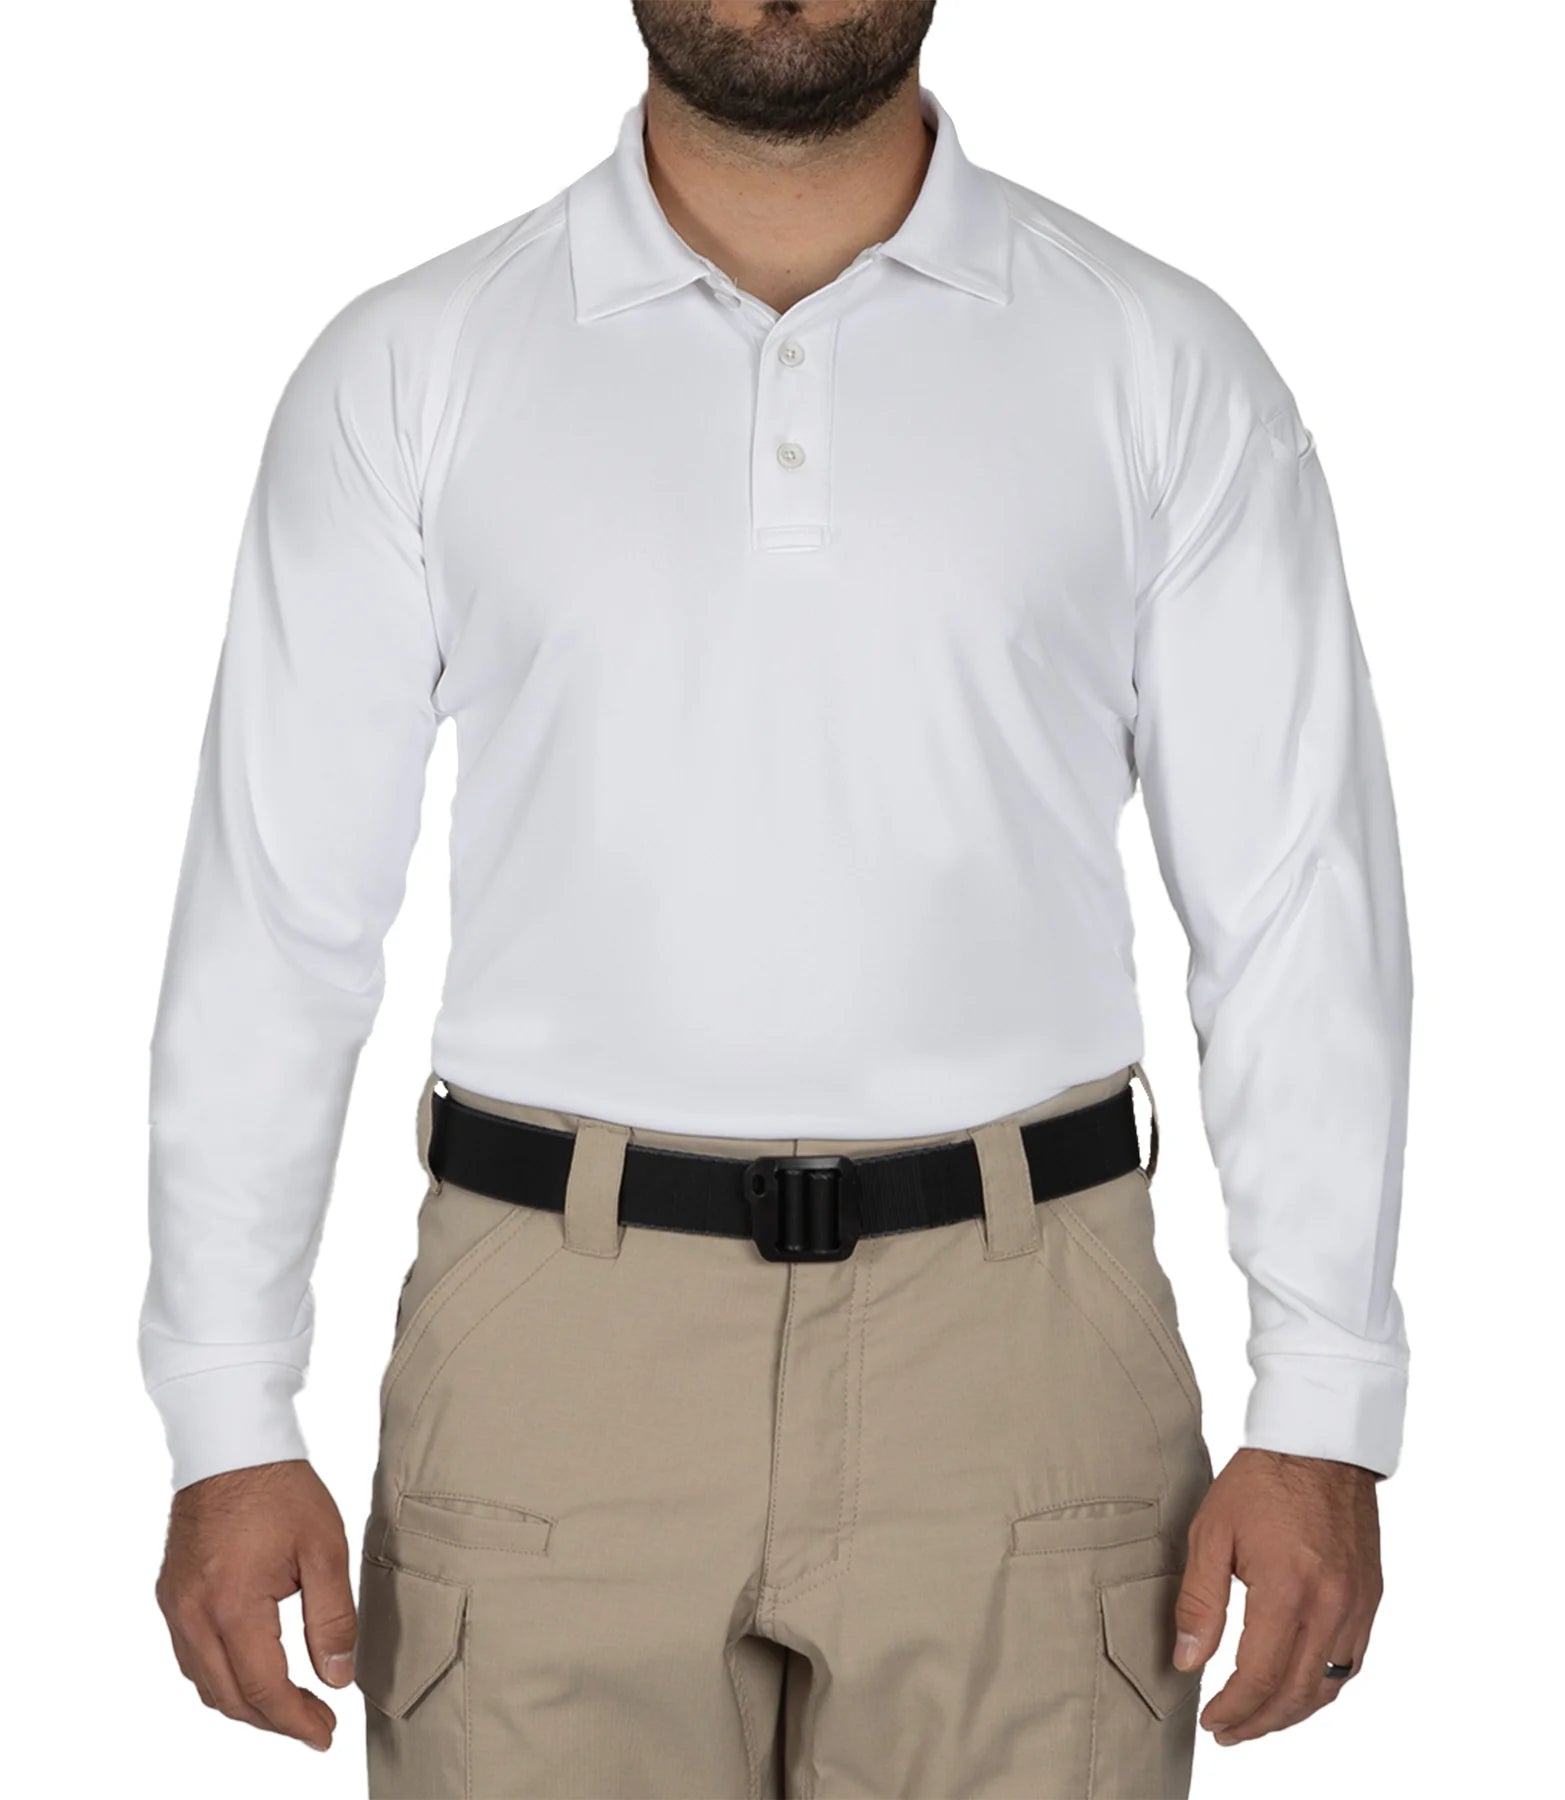 6-Pocket Polyester Pants, Blauer® 8657T